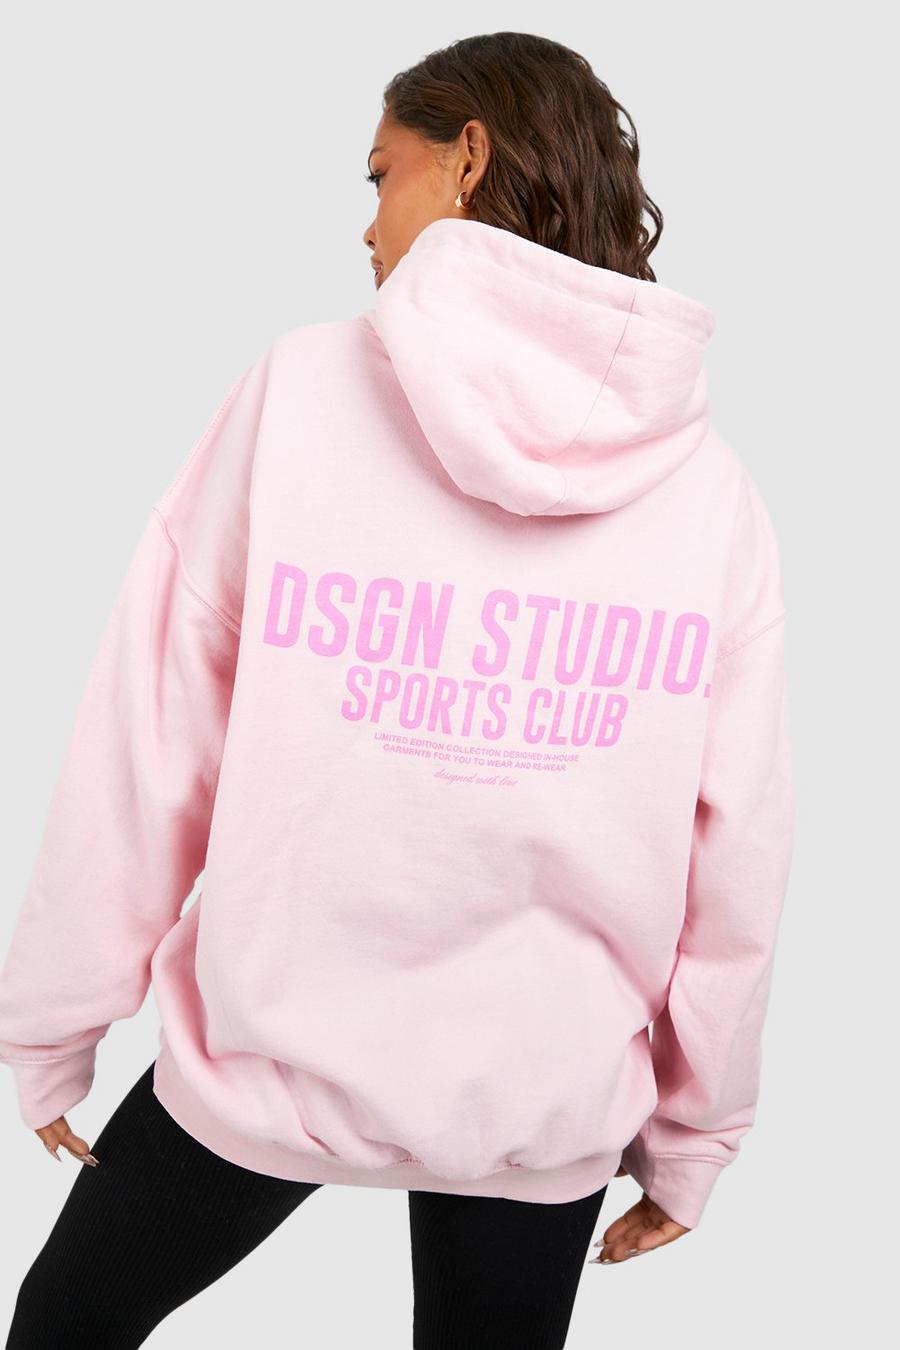 Oversize Hoodie mit Dsgn Studio Sports Club Slogan, Light pink